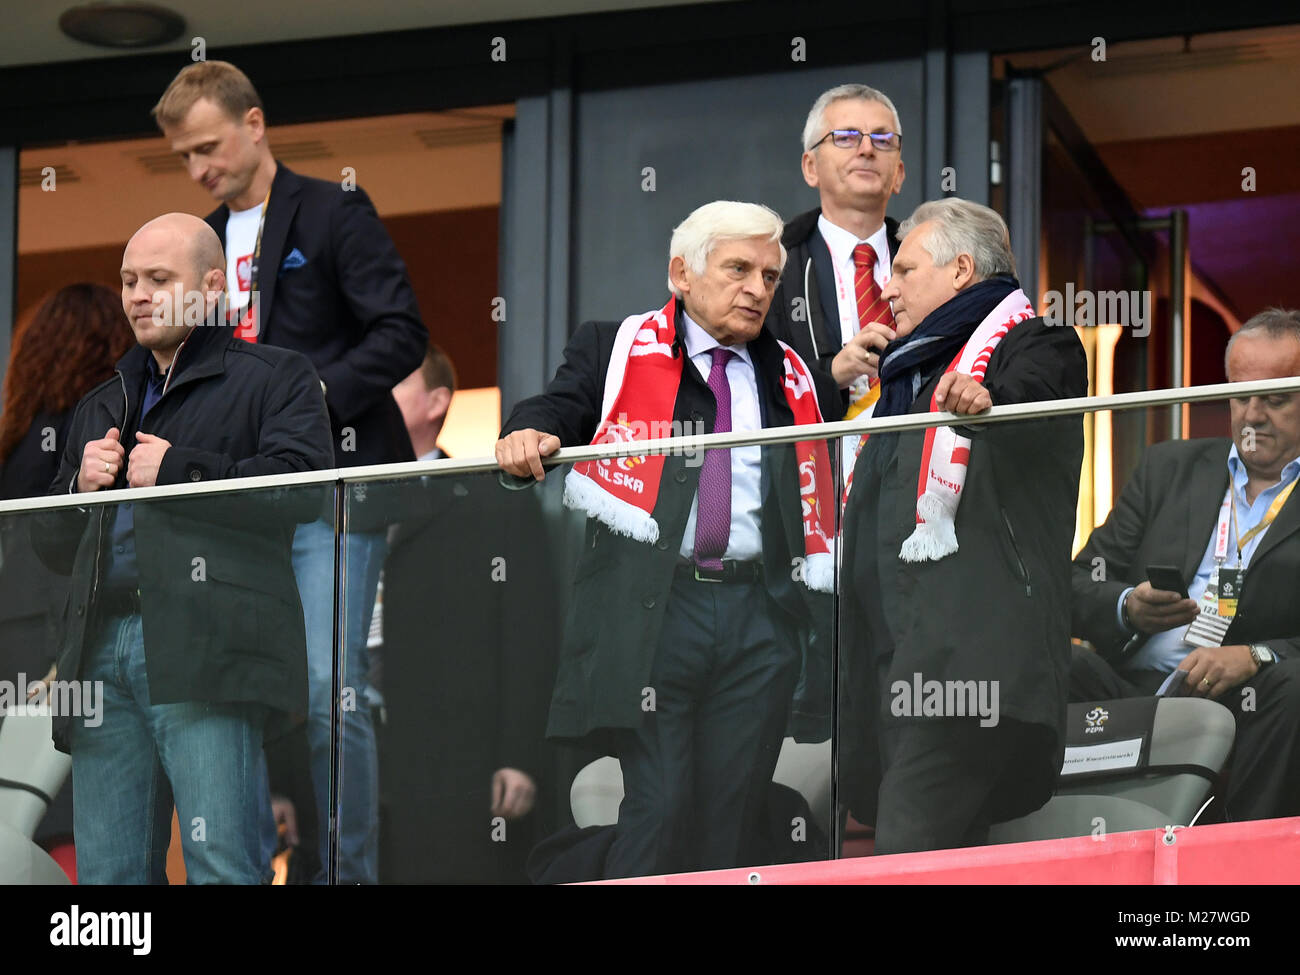 8 Oktober, 2017 - Warschau, Polen: Fußball WM 2018 Qualifikation Rusia Polen - Montenegro o/p Jerzy Buzek, Aleksander Kwasniewski Stockfoto